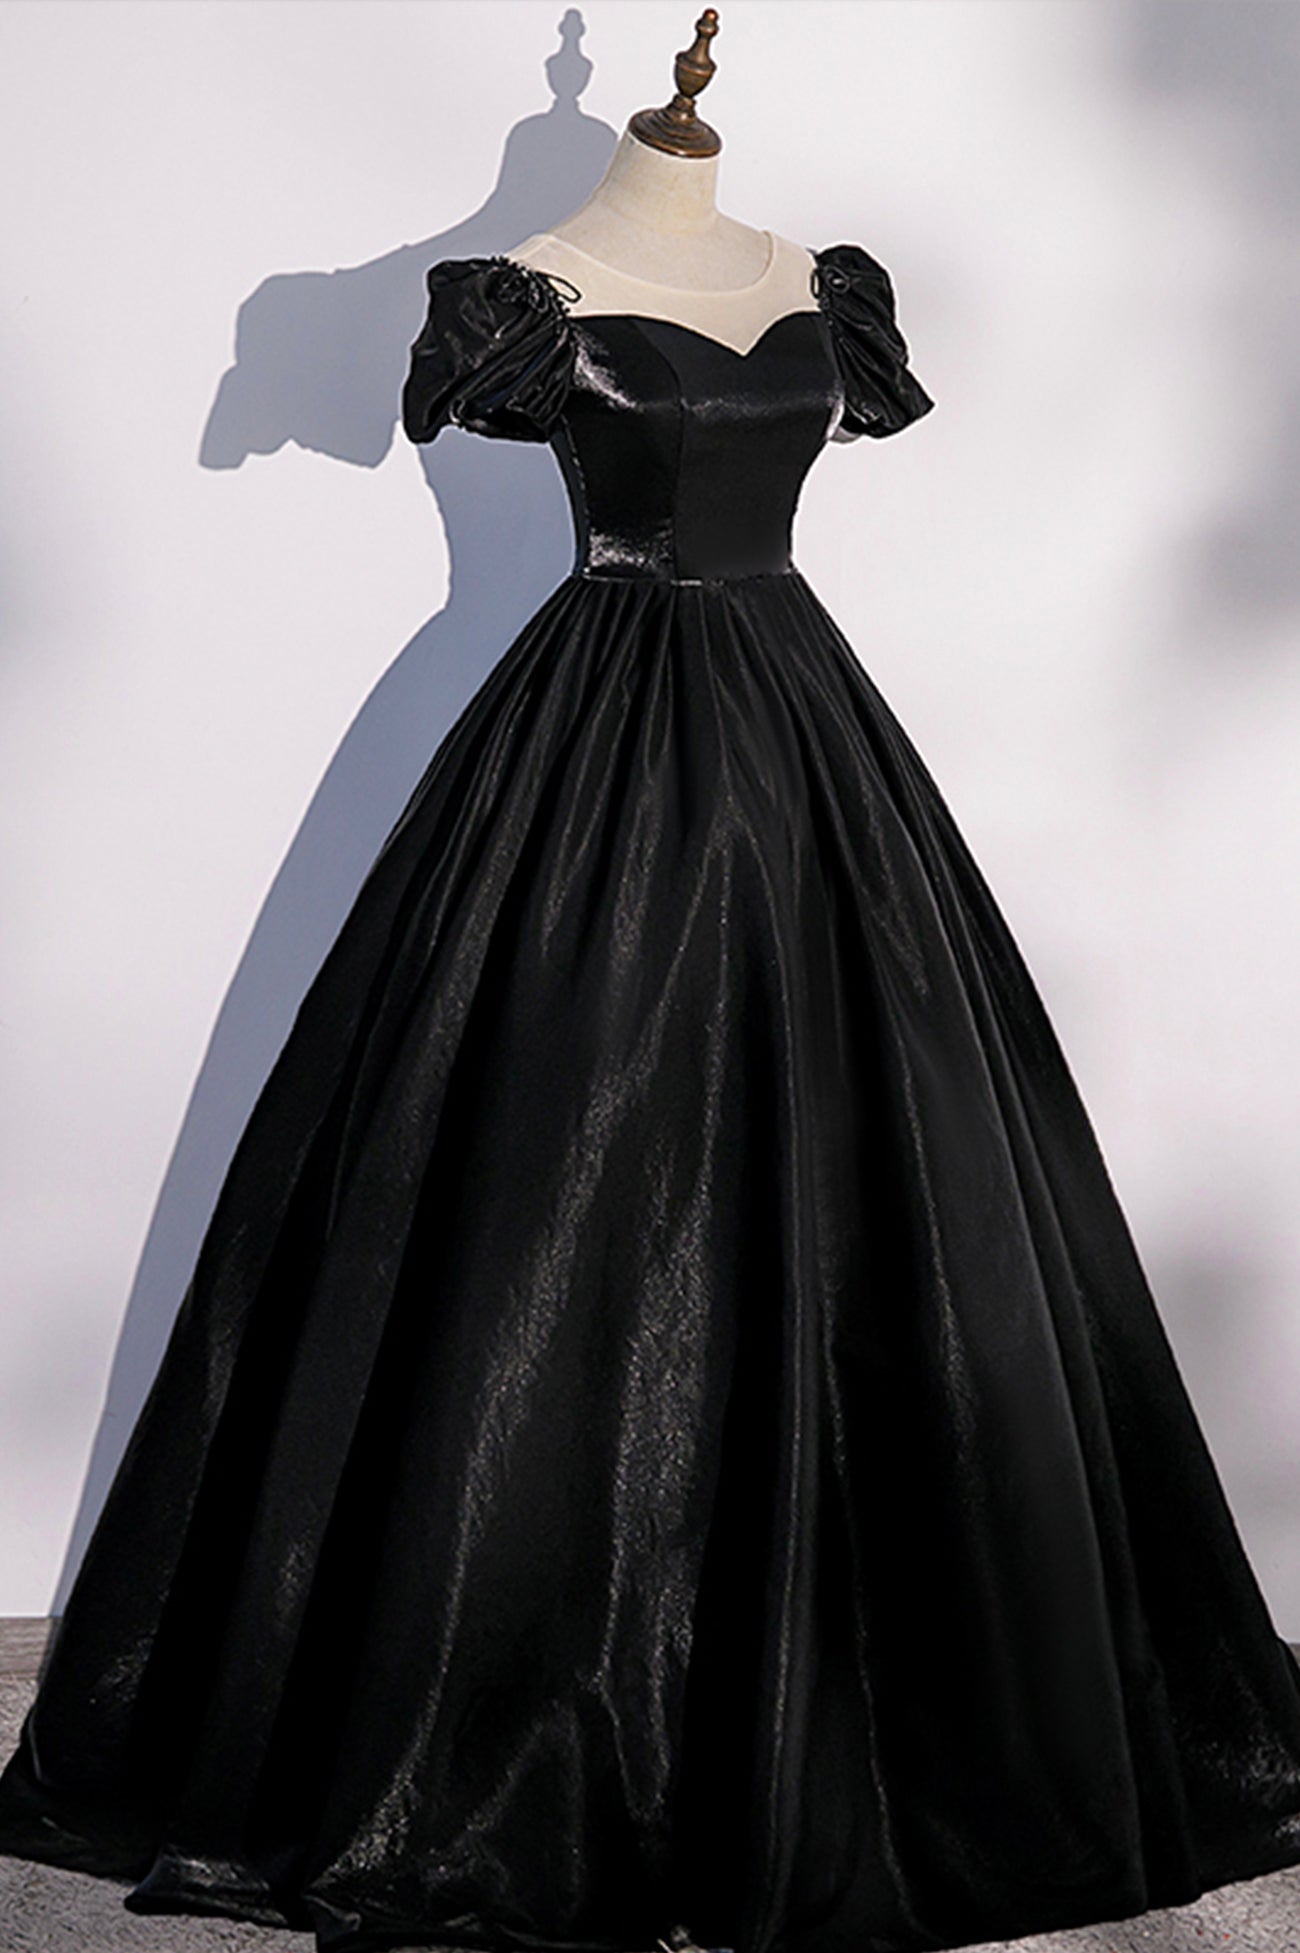 Party Dress Cocktail, Black Satin Long Prom Dress, Black A-Line Short Sleeve Evening Dress